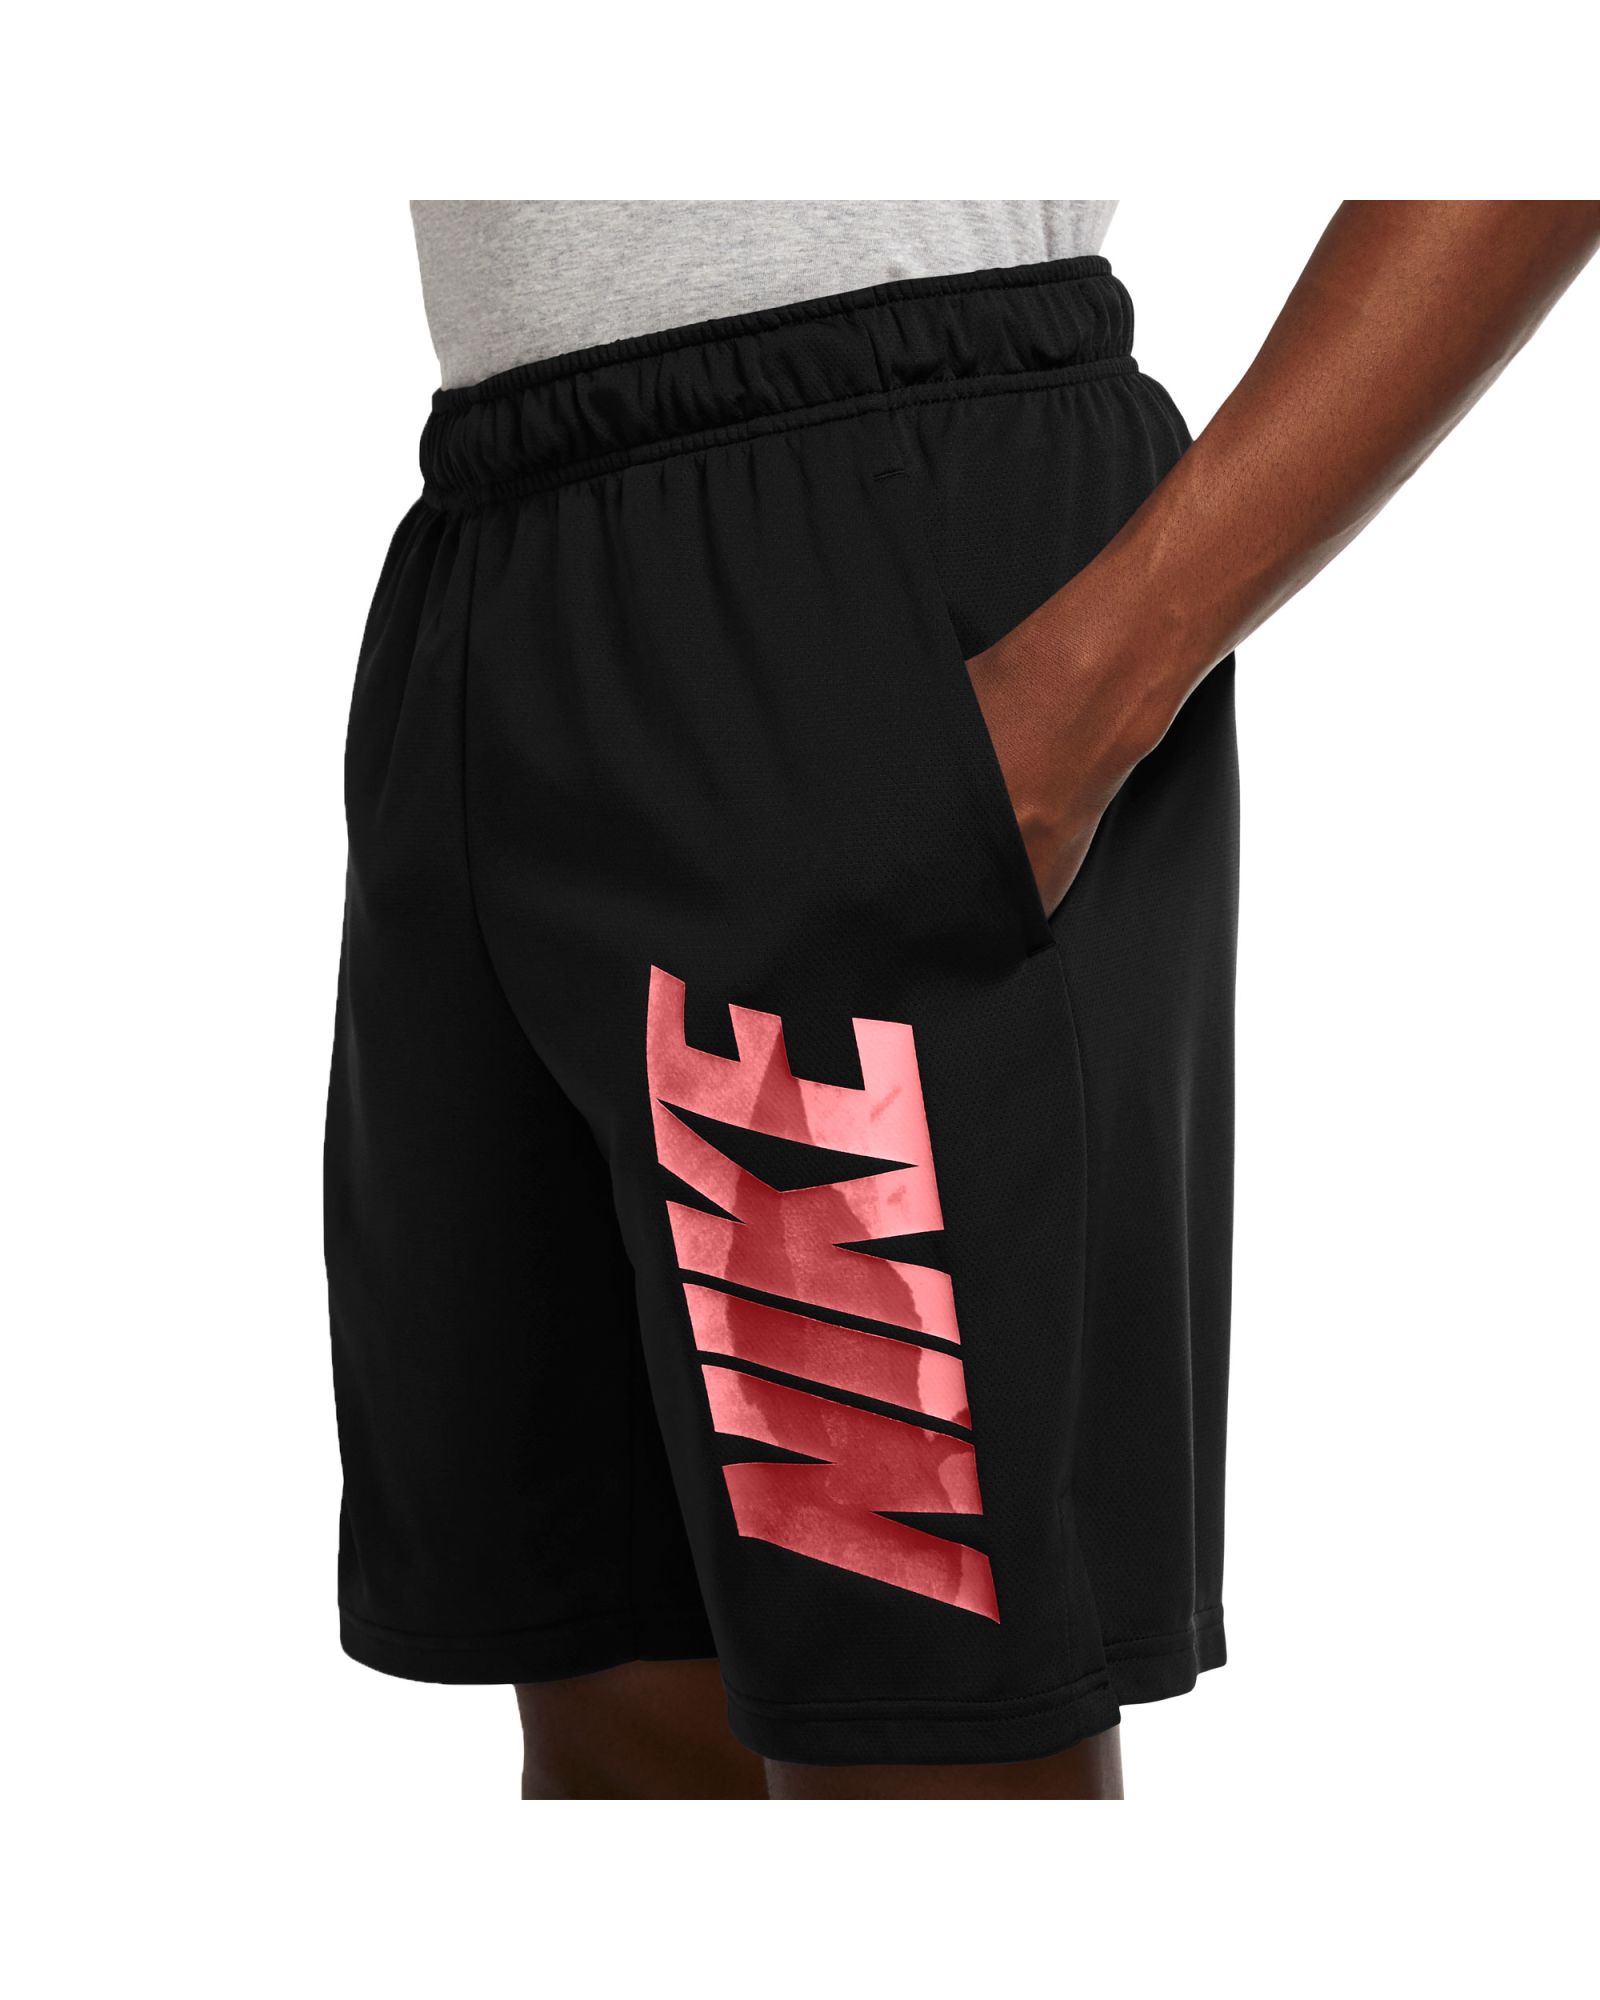 Pantalón Nike Dry Short - Fútbol Factory